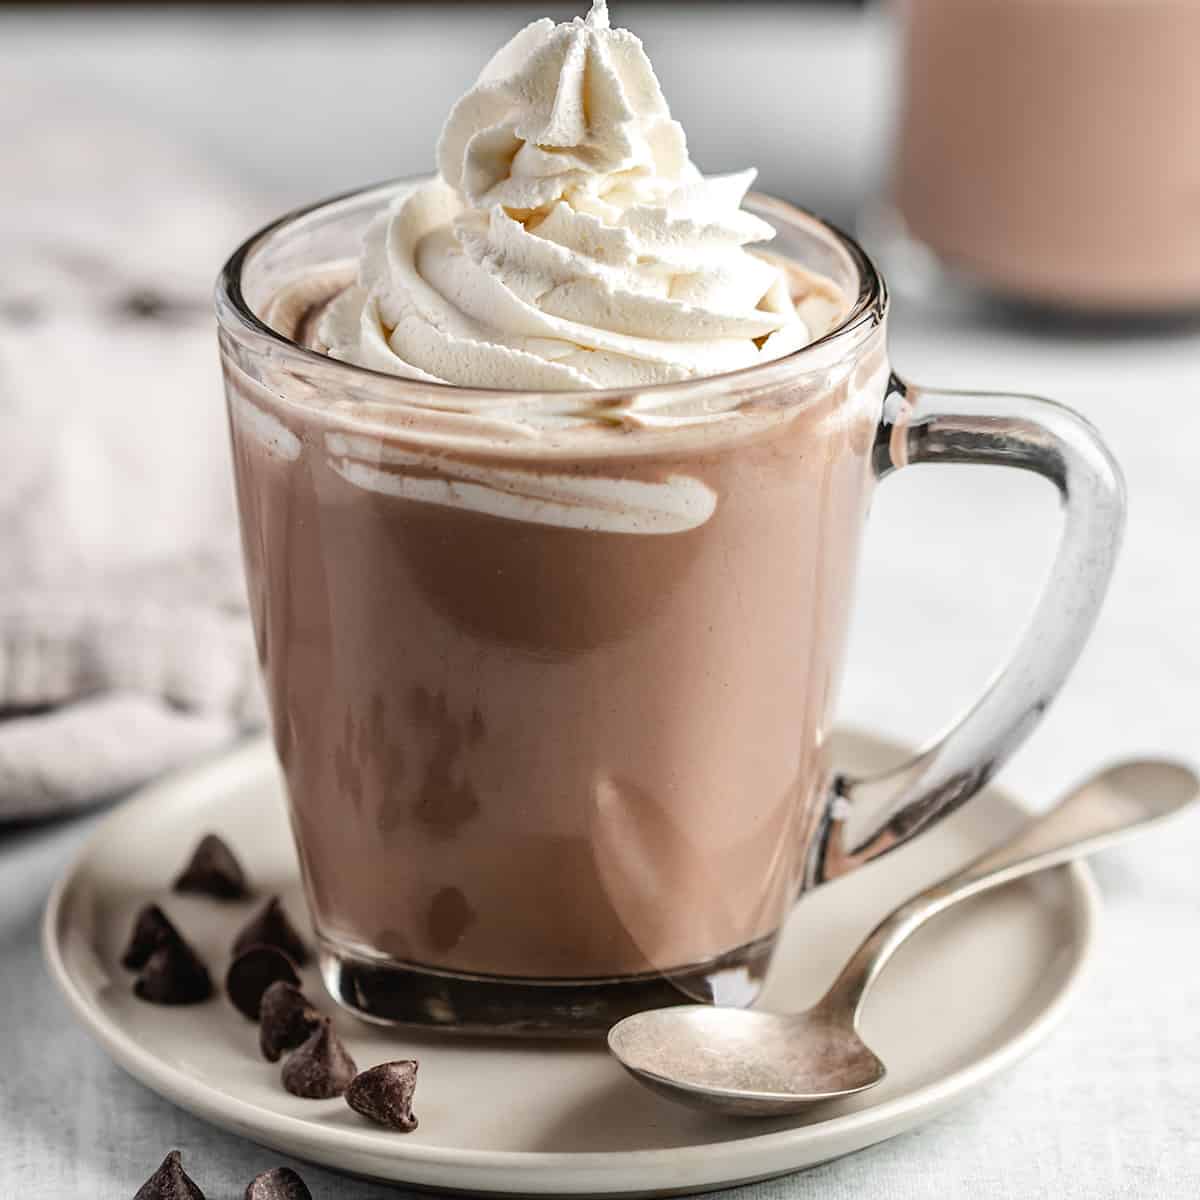 a glass mug of Crockp ot Hot Chocolate topped with whipped cream